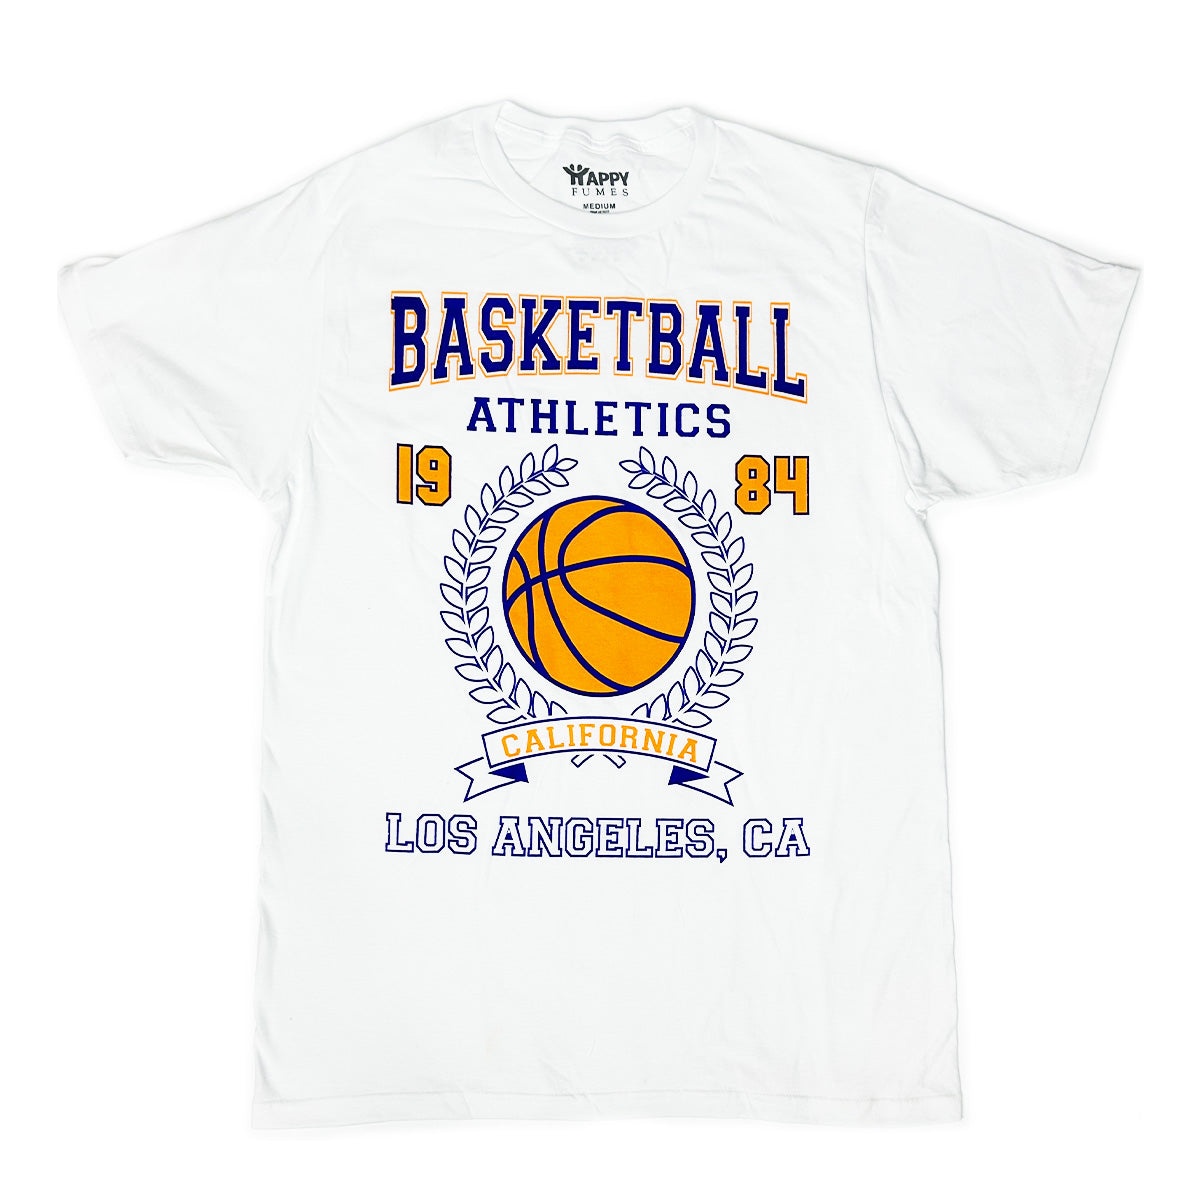 Basketball White Short Sleeve T-Shirt - Pack of 6 Units  1S, 2M, 2L, 1XL